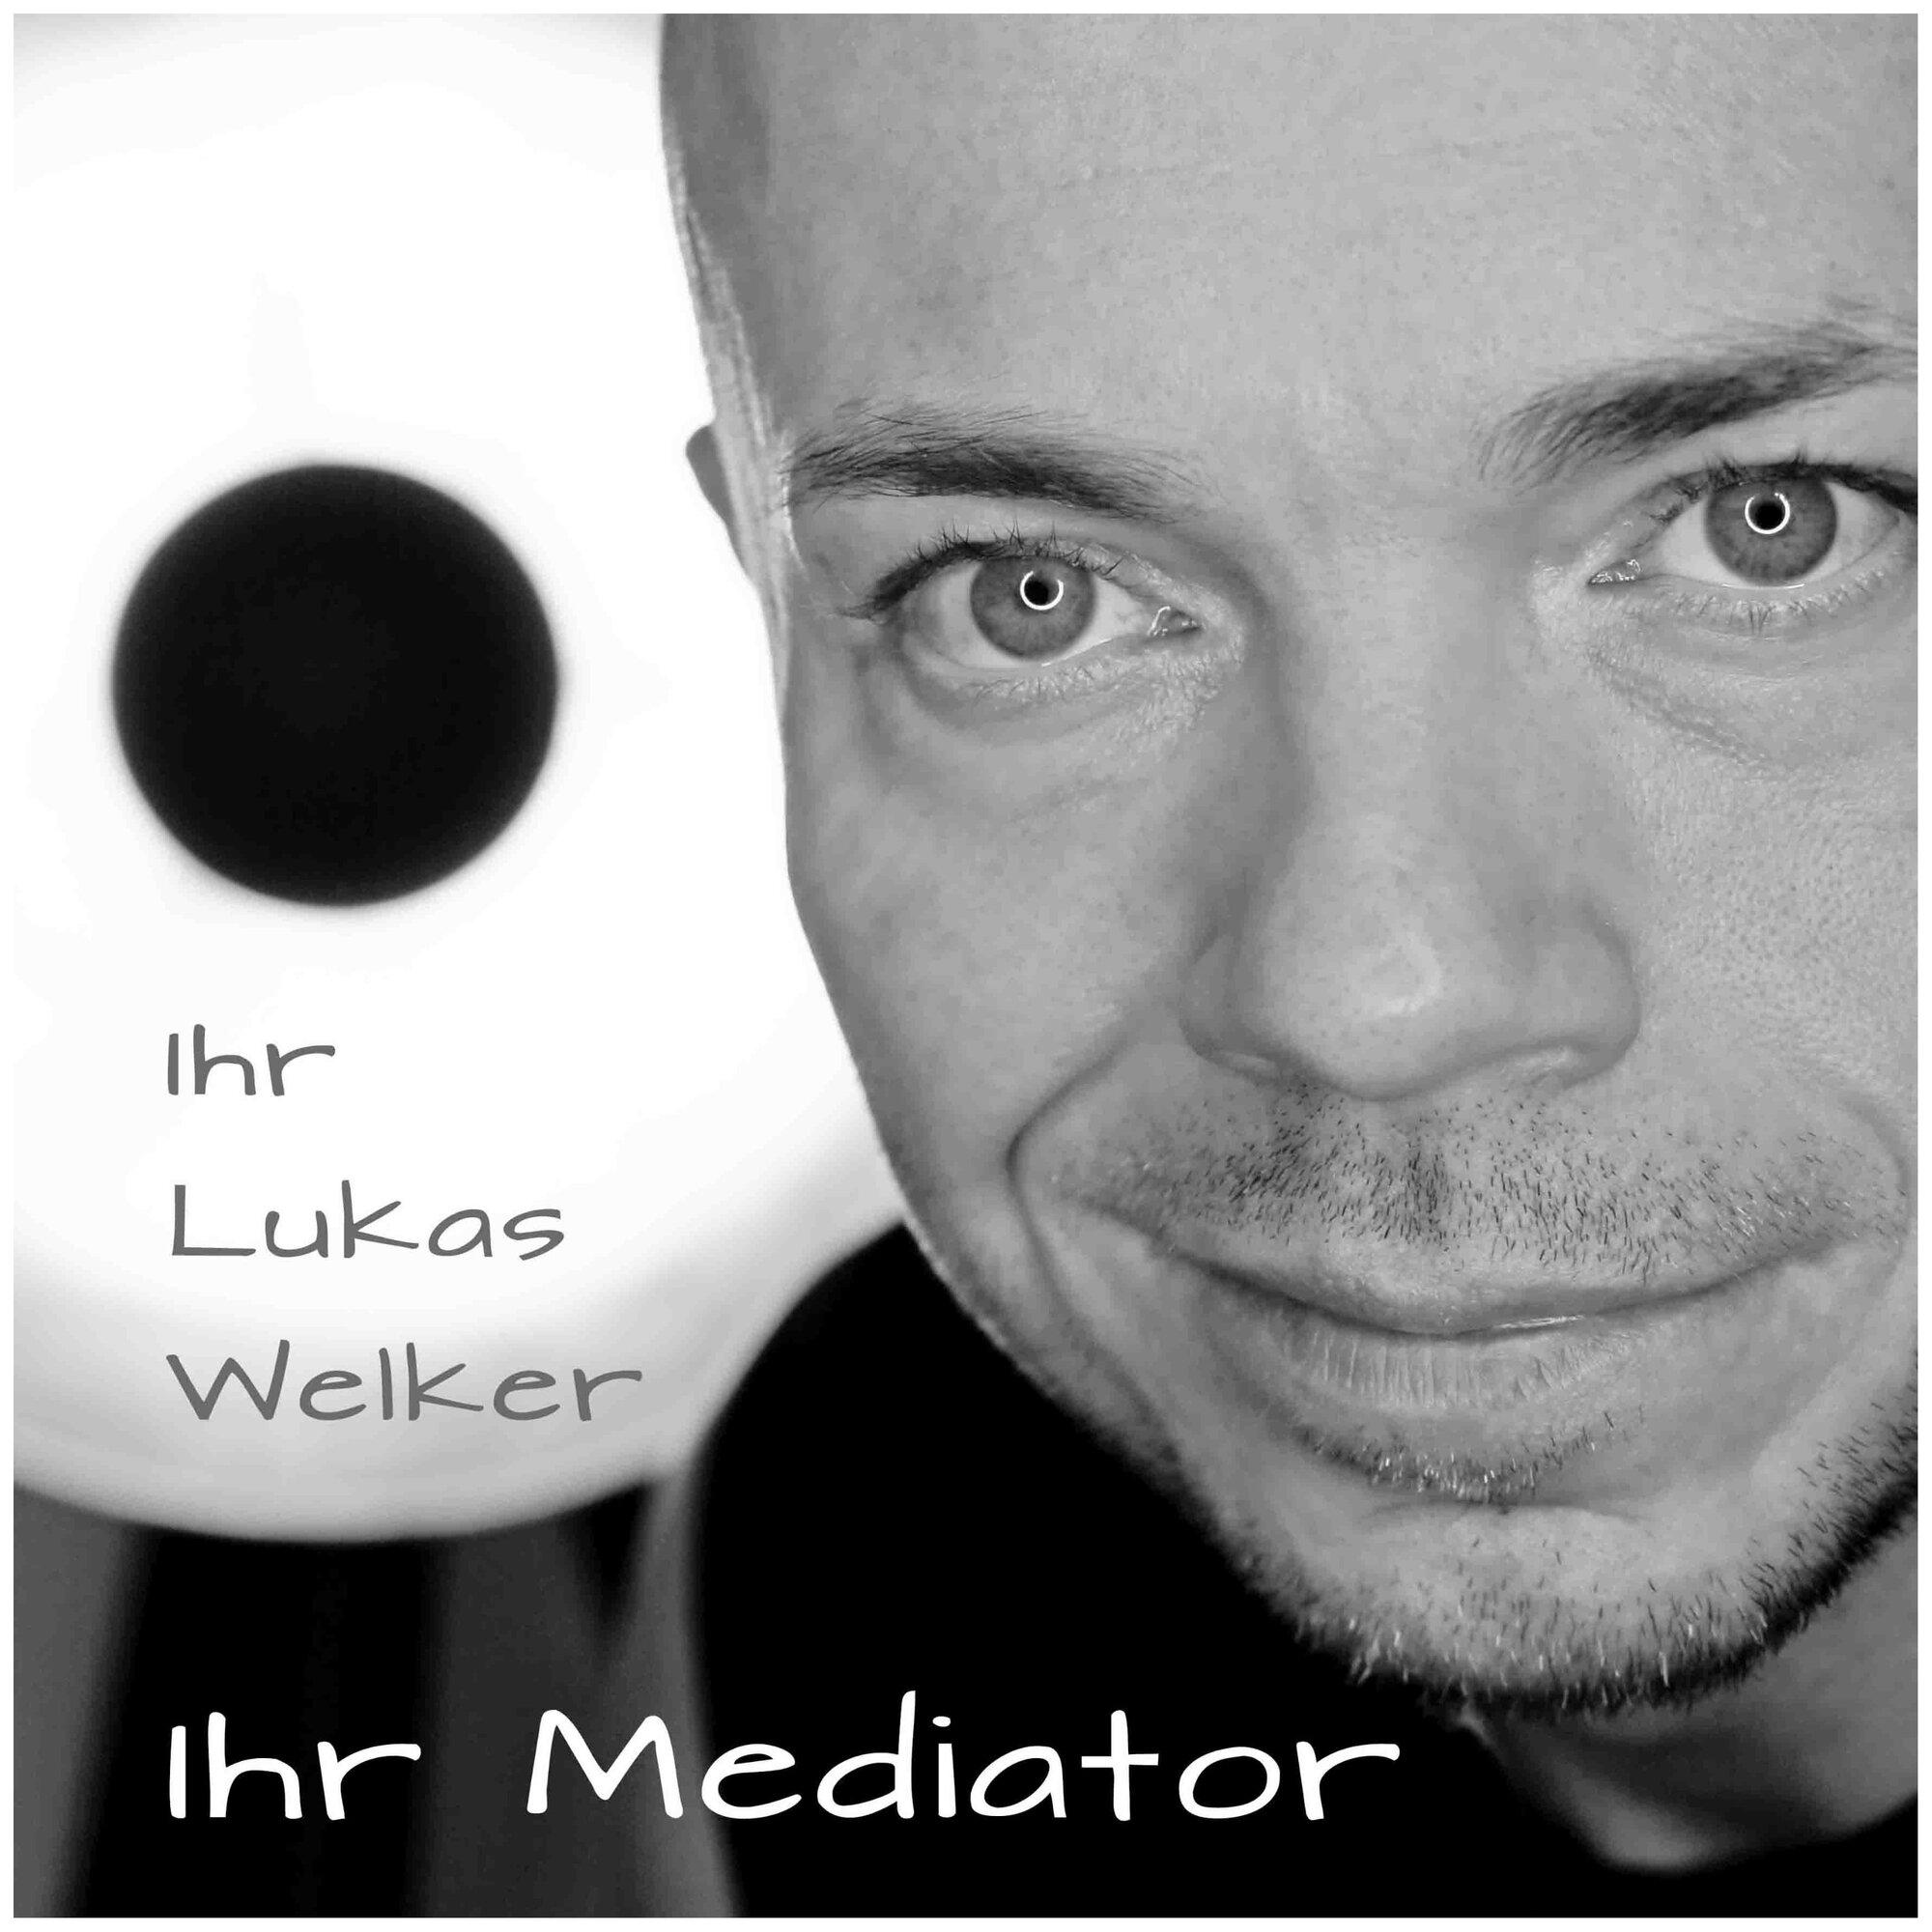 Mach-Mediation.de - Mediator Lukas Welker, Mörikestraße 6 in Nürnberg